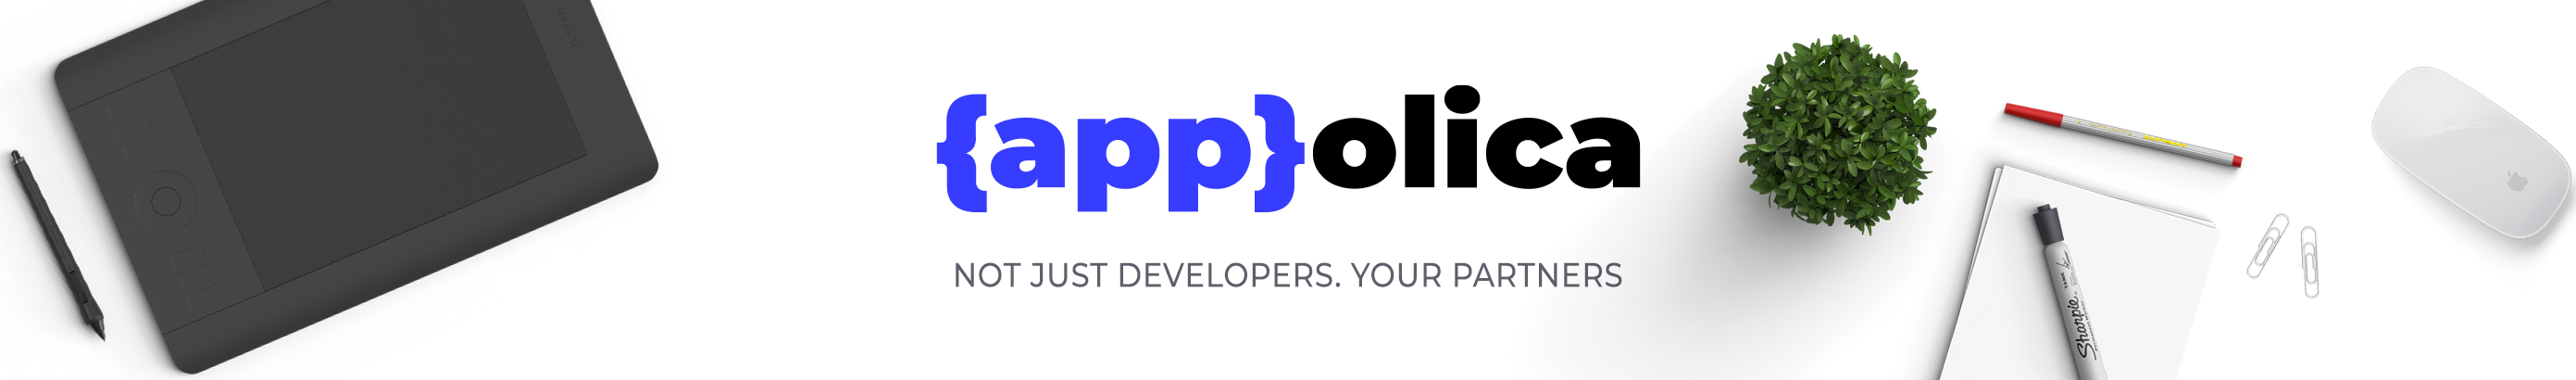 Appolica Ltd profil başlığı